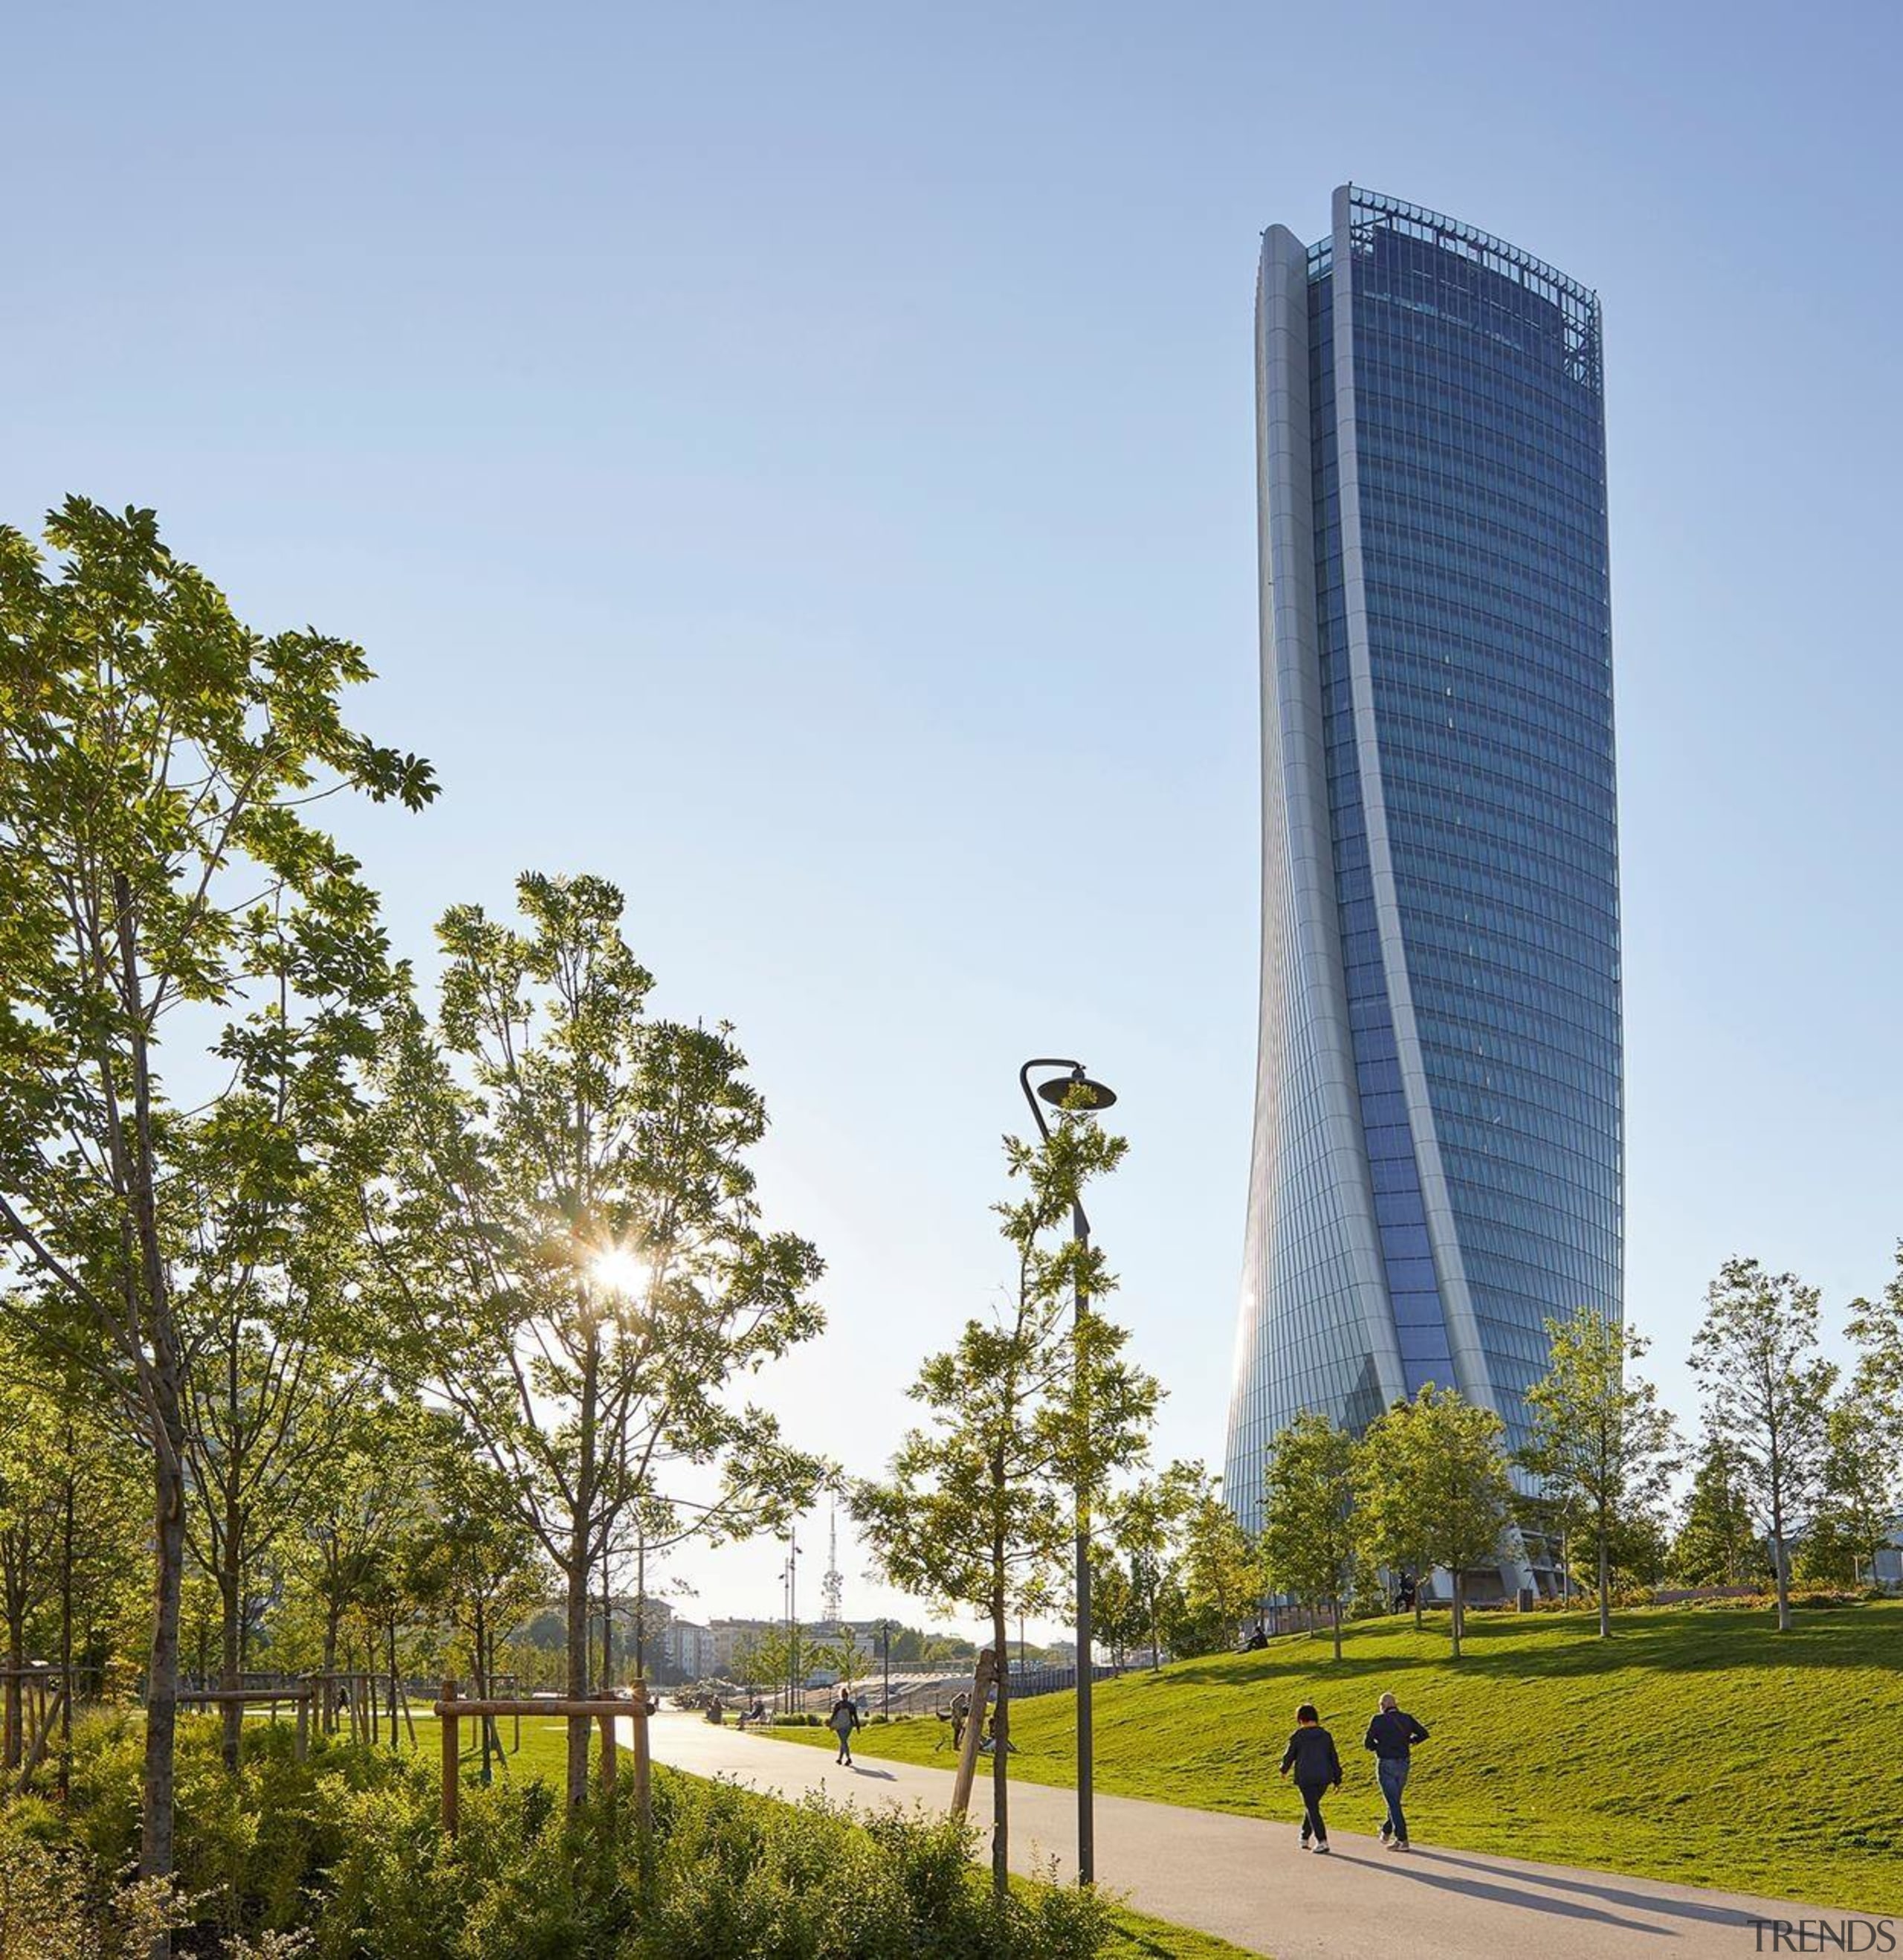 The new tower rises up above Milan - architecture, building, condominium, corporate headquarters, daytime, metropolitan area, sky, skyscraper, tower, tower block, tree, teal